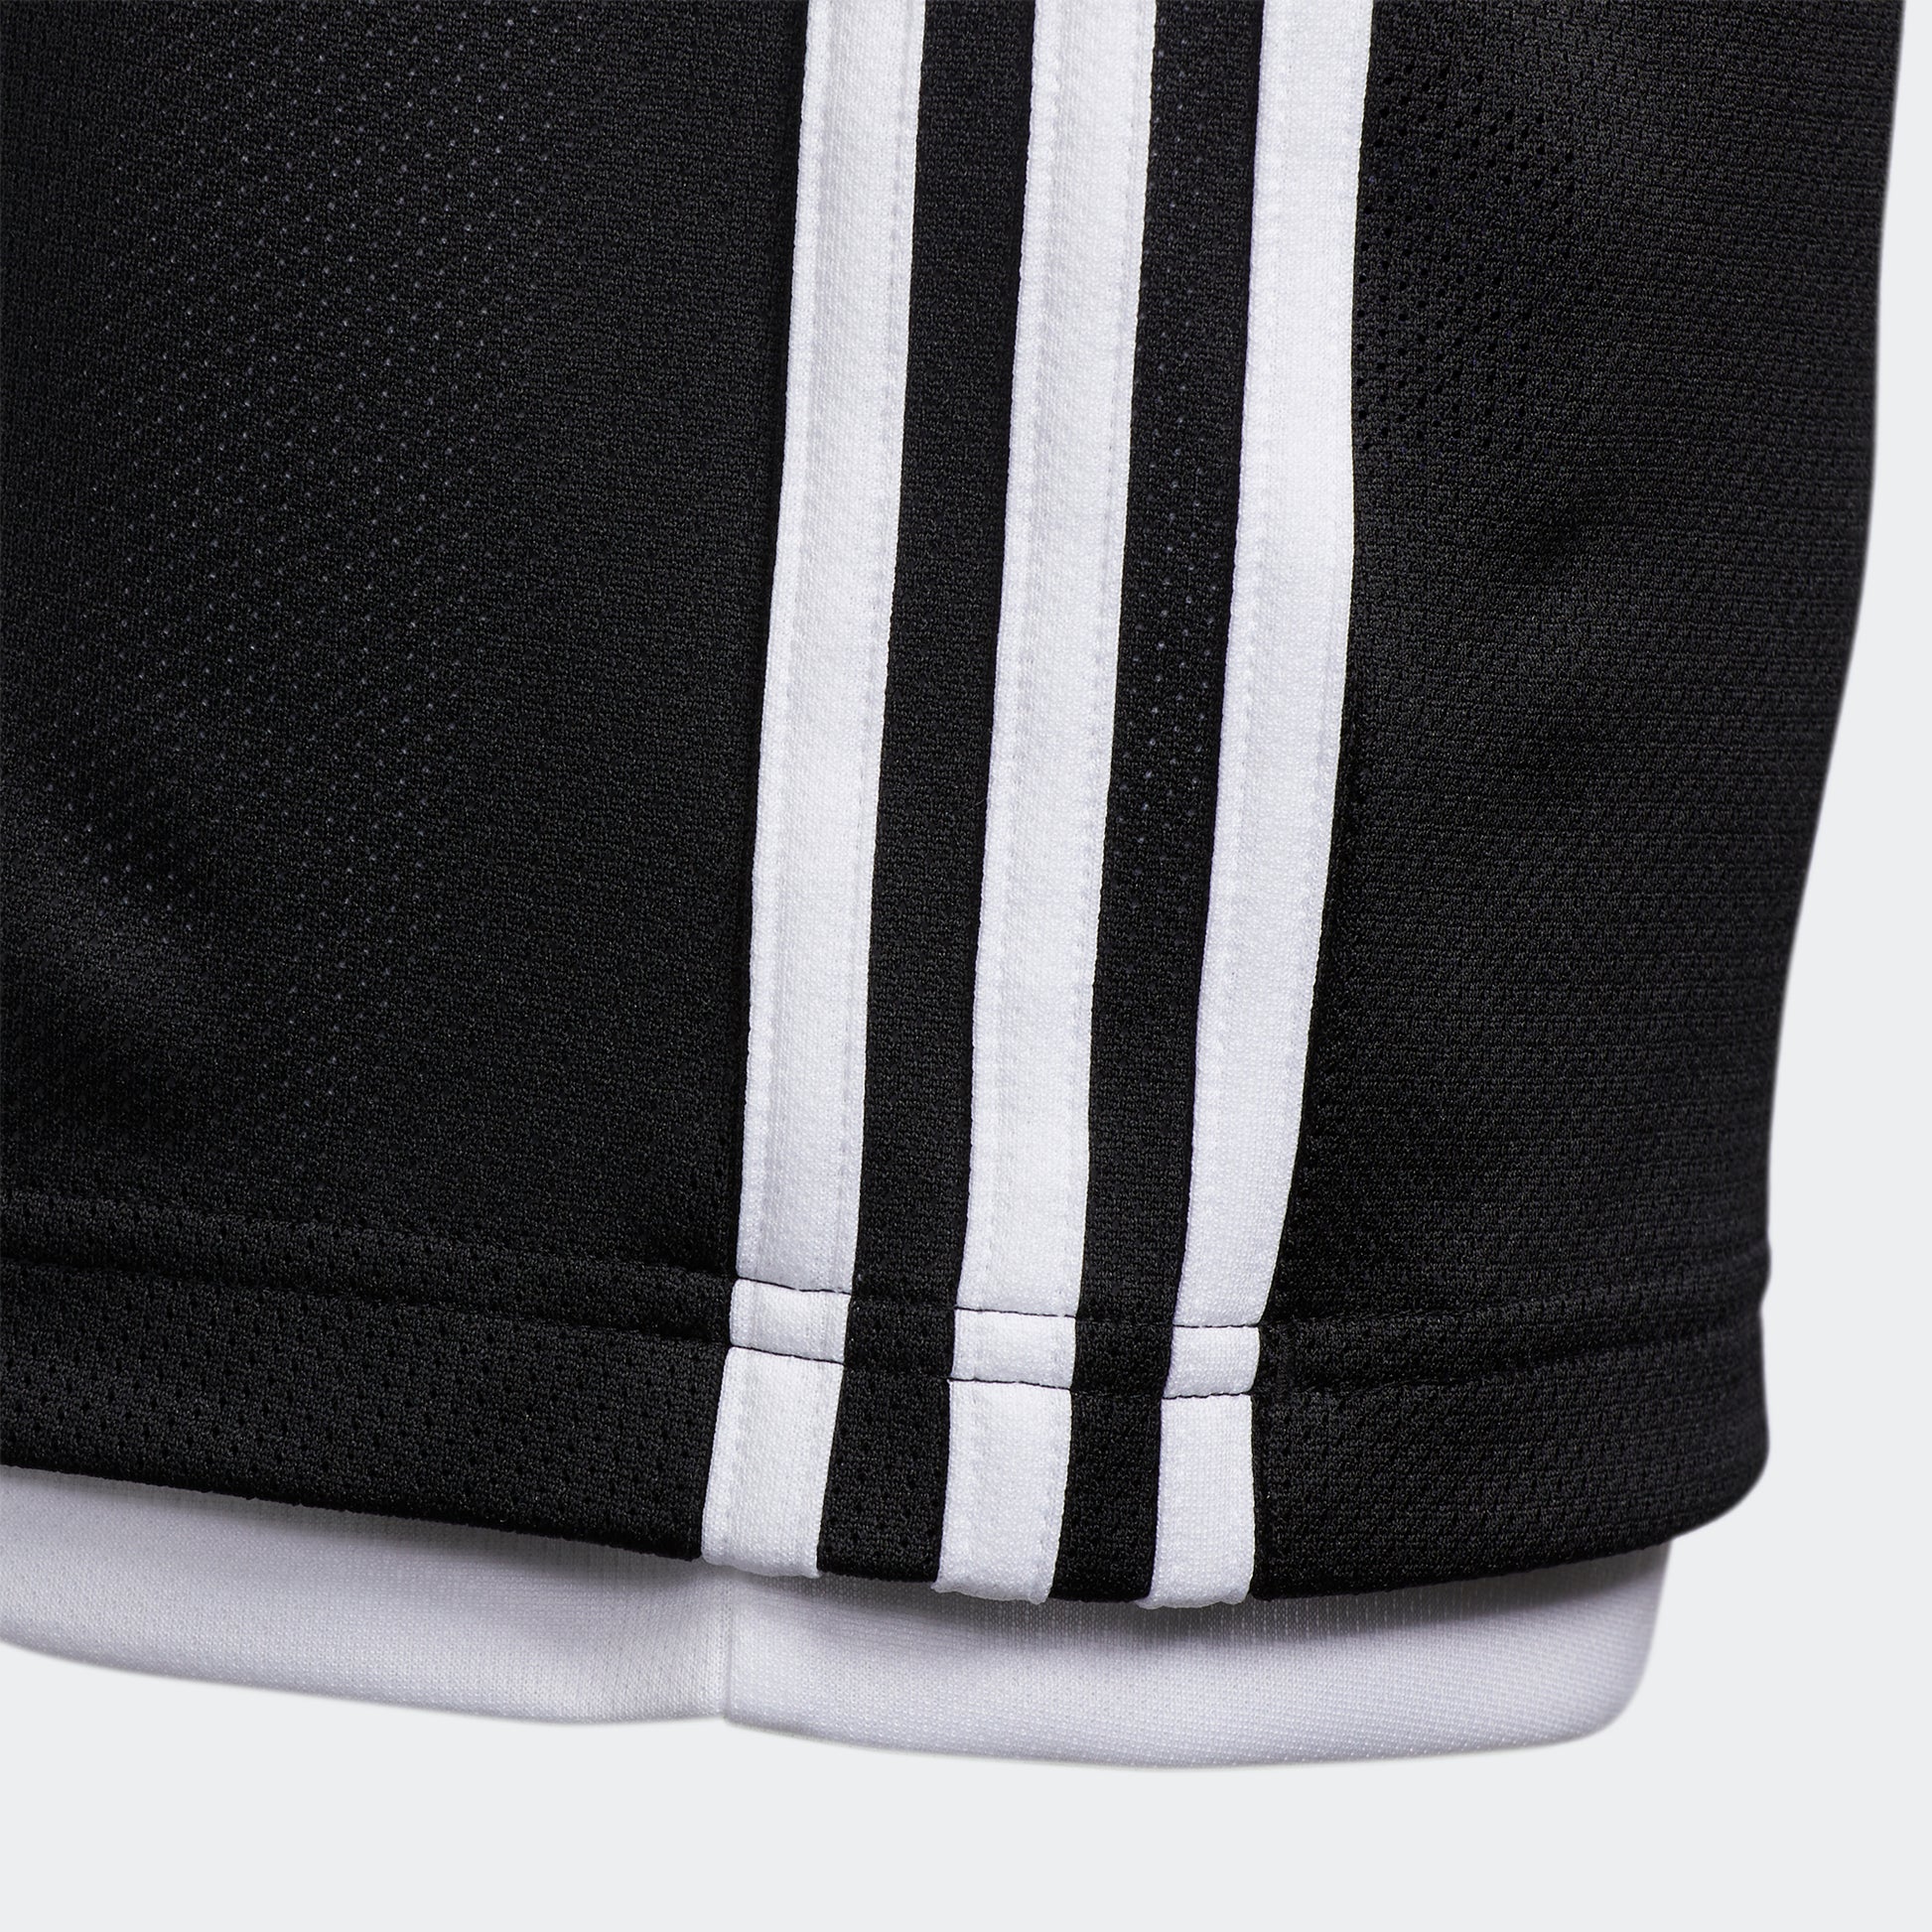 adidas 3G Speed Reversible Basketball Jersey - Black